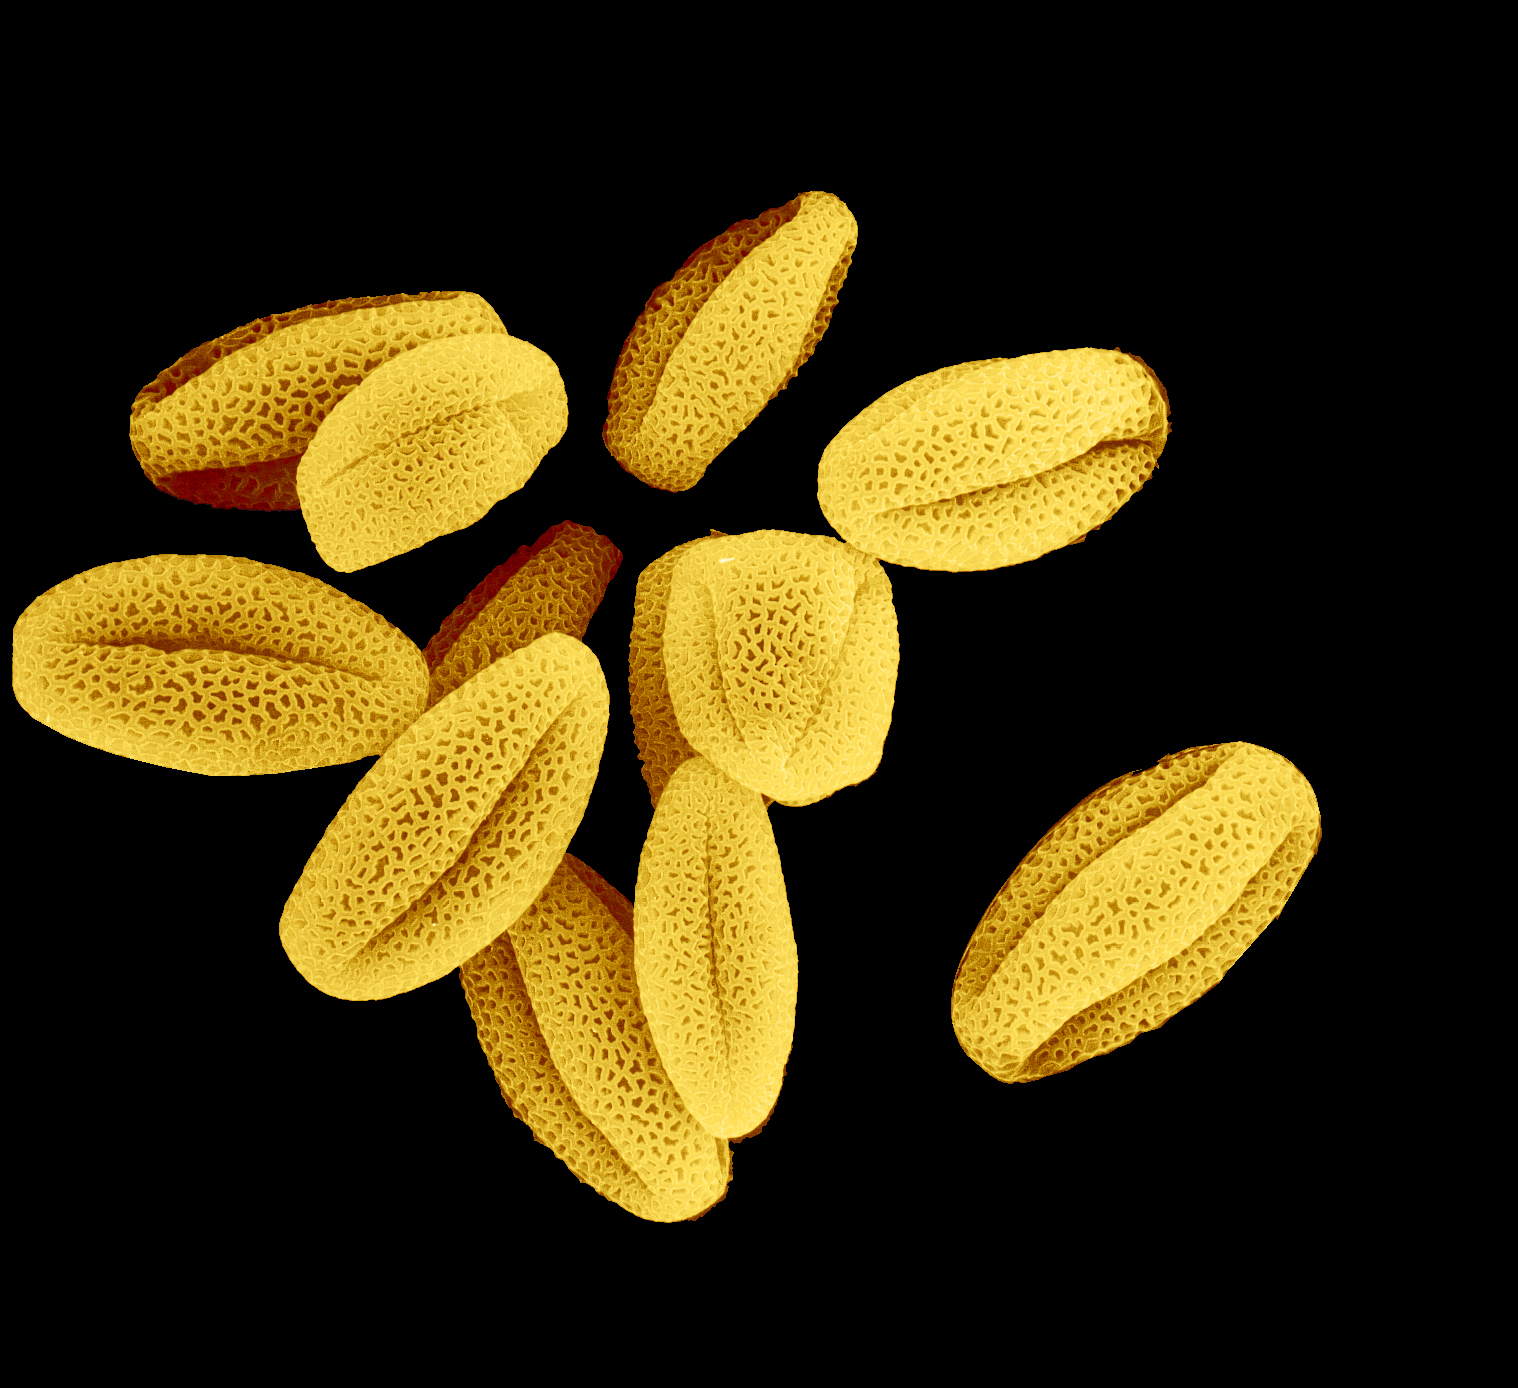 Черная пыльца. Микрофотография пыльцы покрытосеменных. Пыльца цветковых растений. Пыльца сосны микрофотография. Пыльца растений под микроскопом.